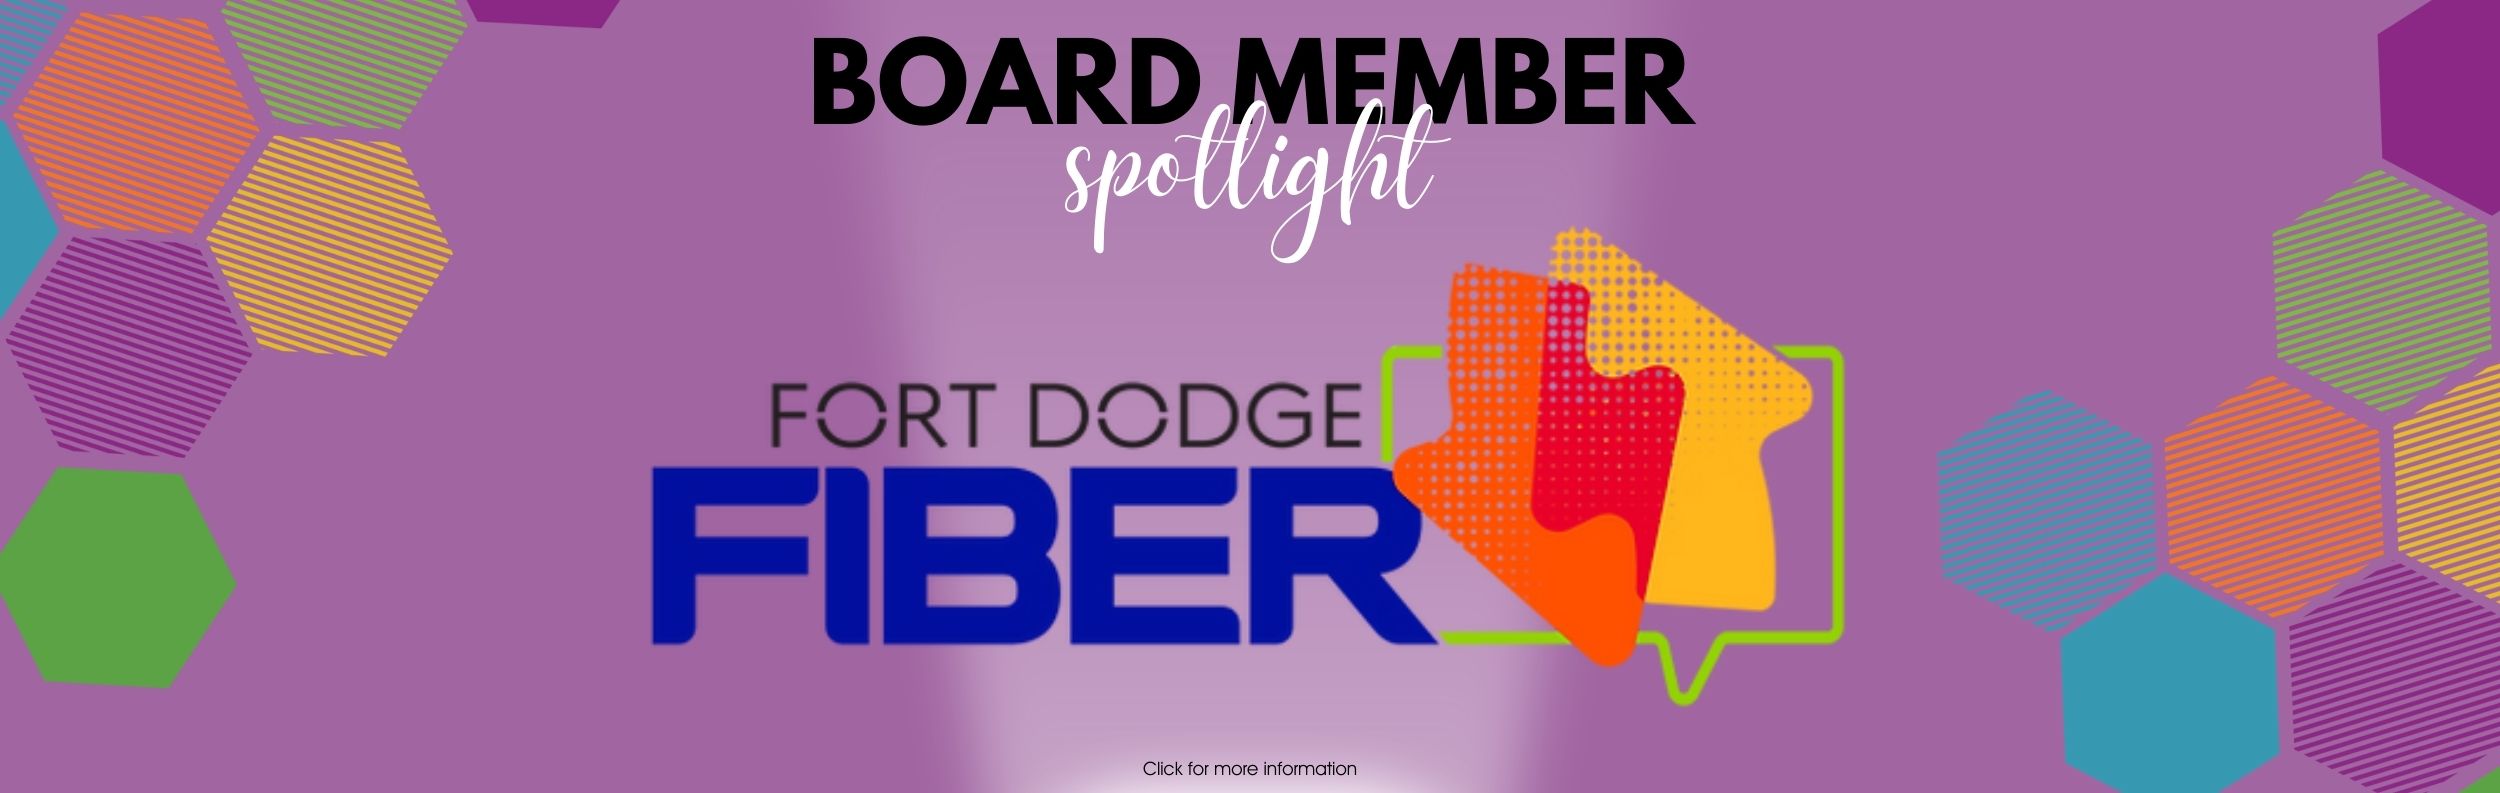 Board Member Spotlight: Fort Dodge Fiber